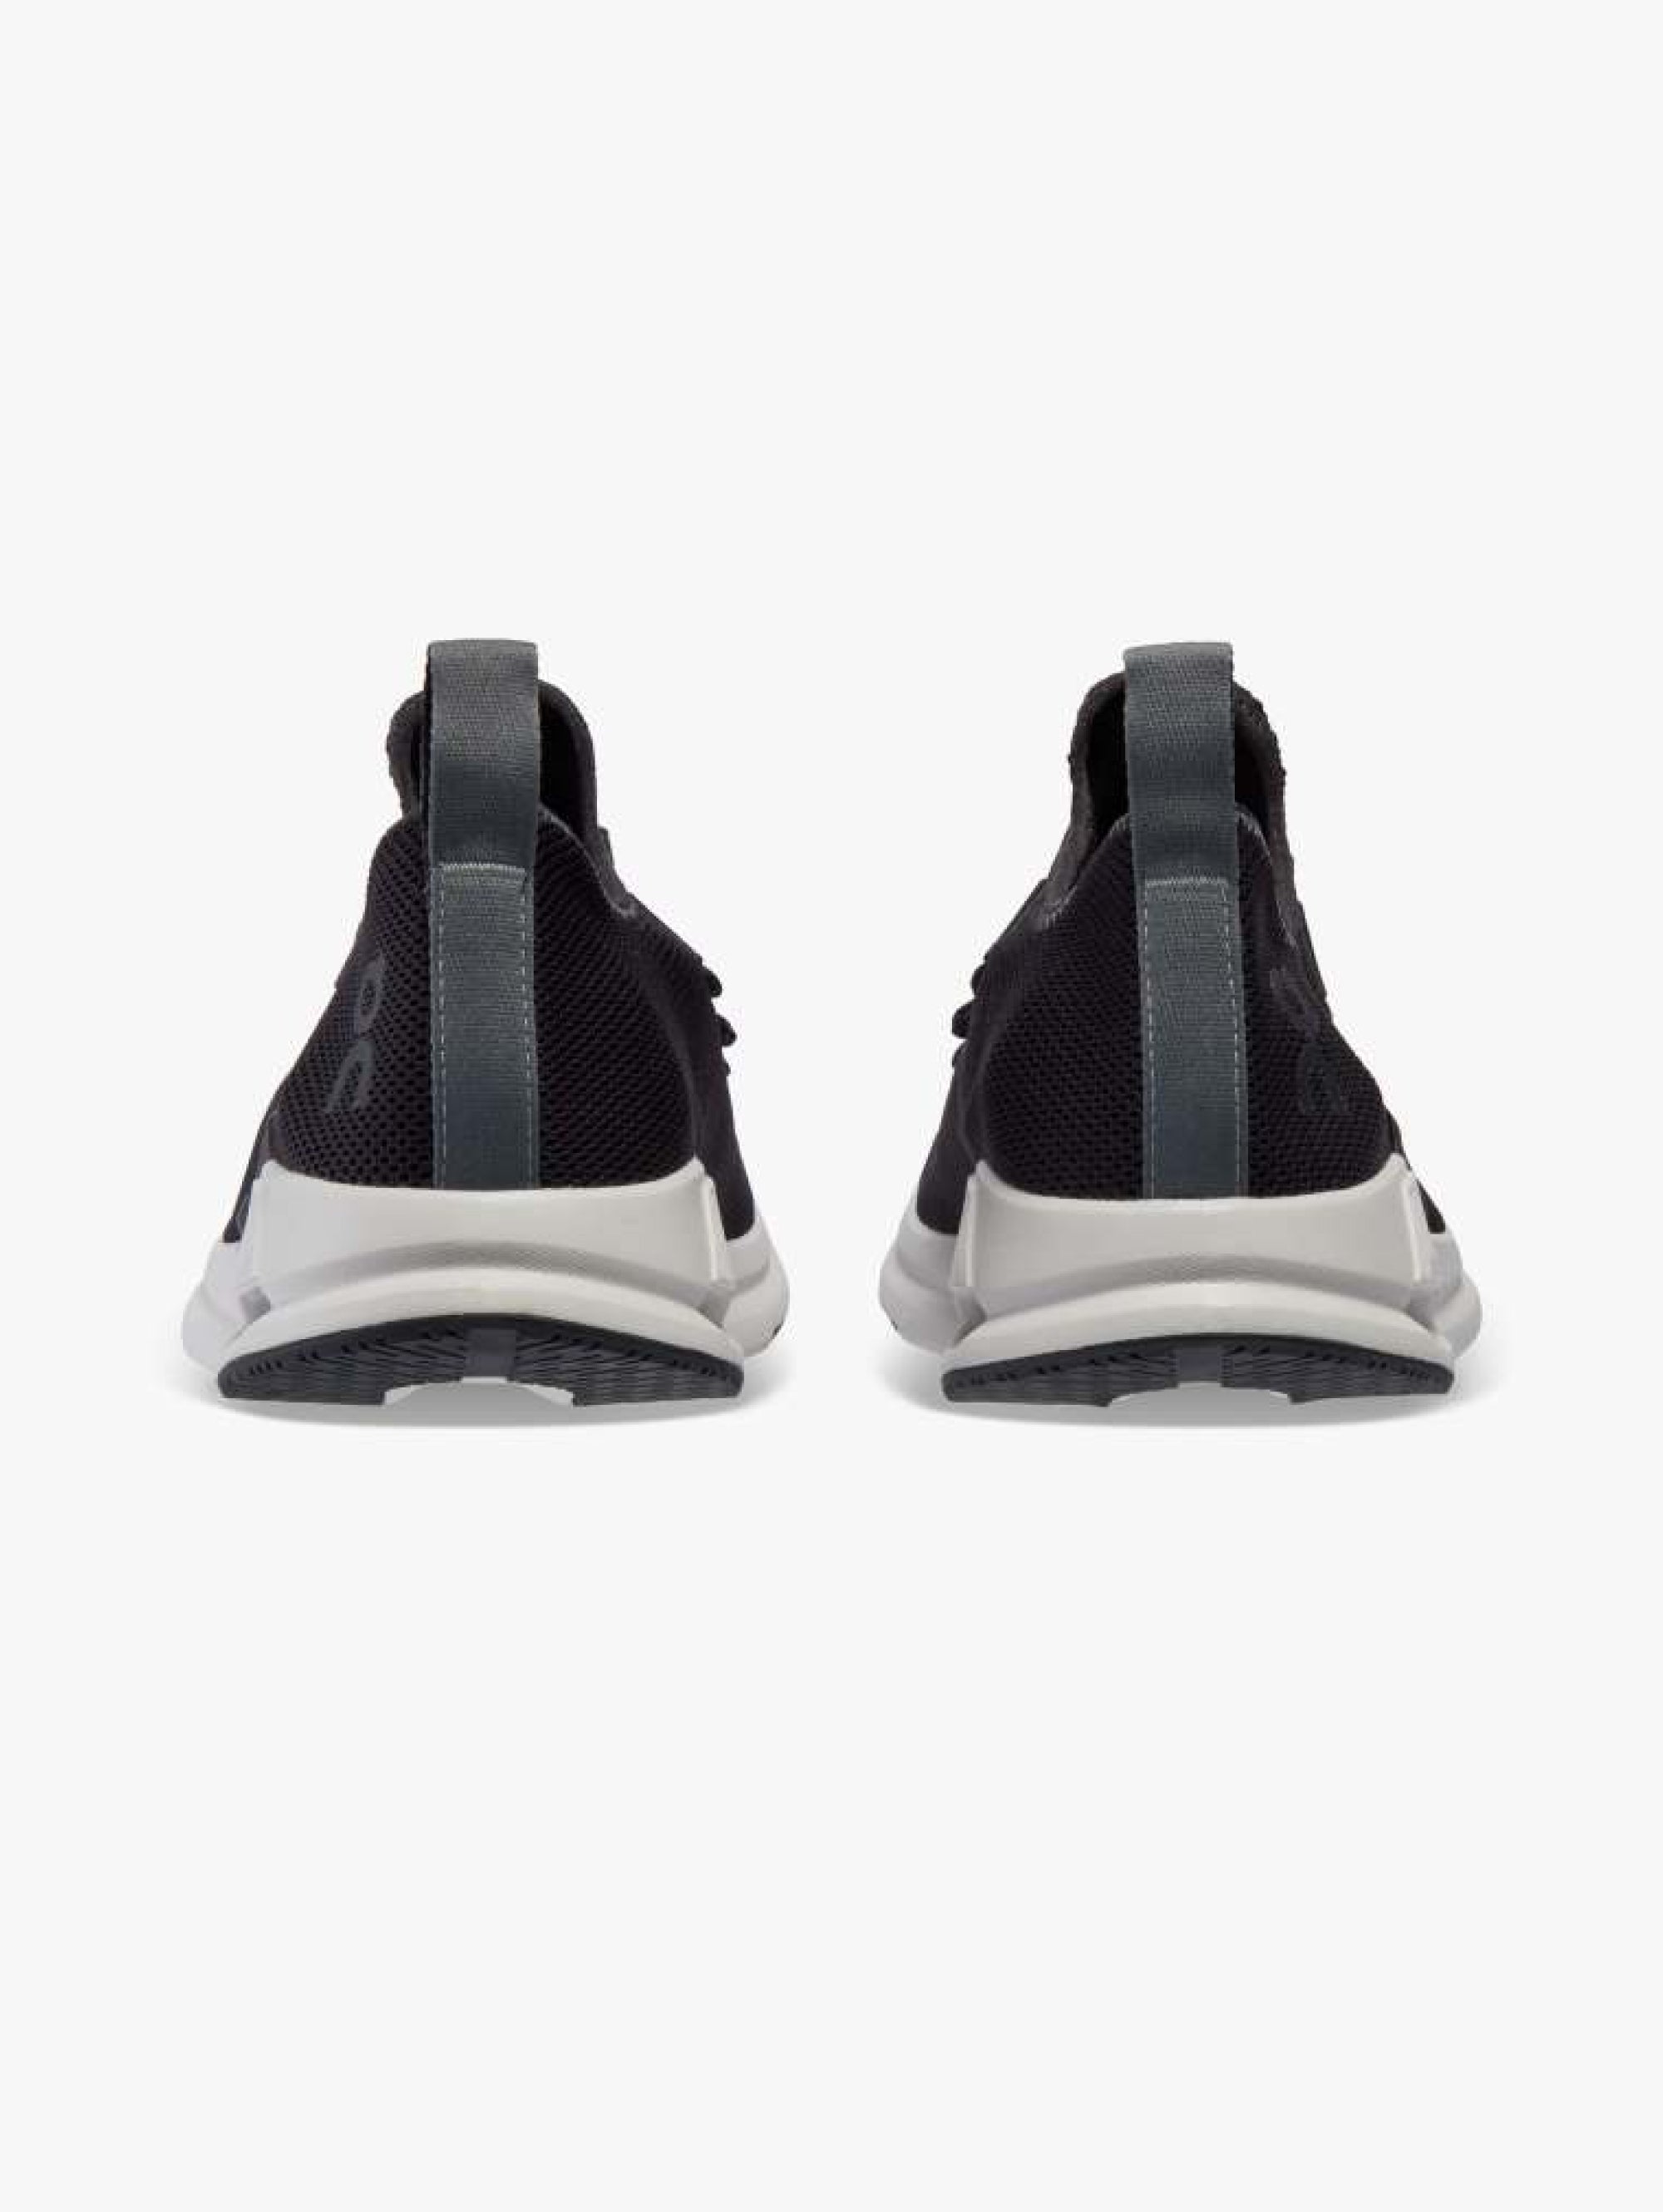 Cloudeasy Sneakers in Black Recycled Upper